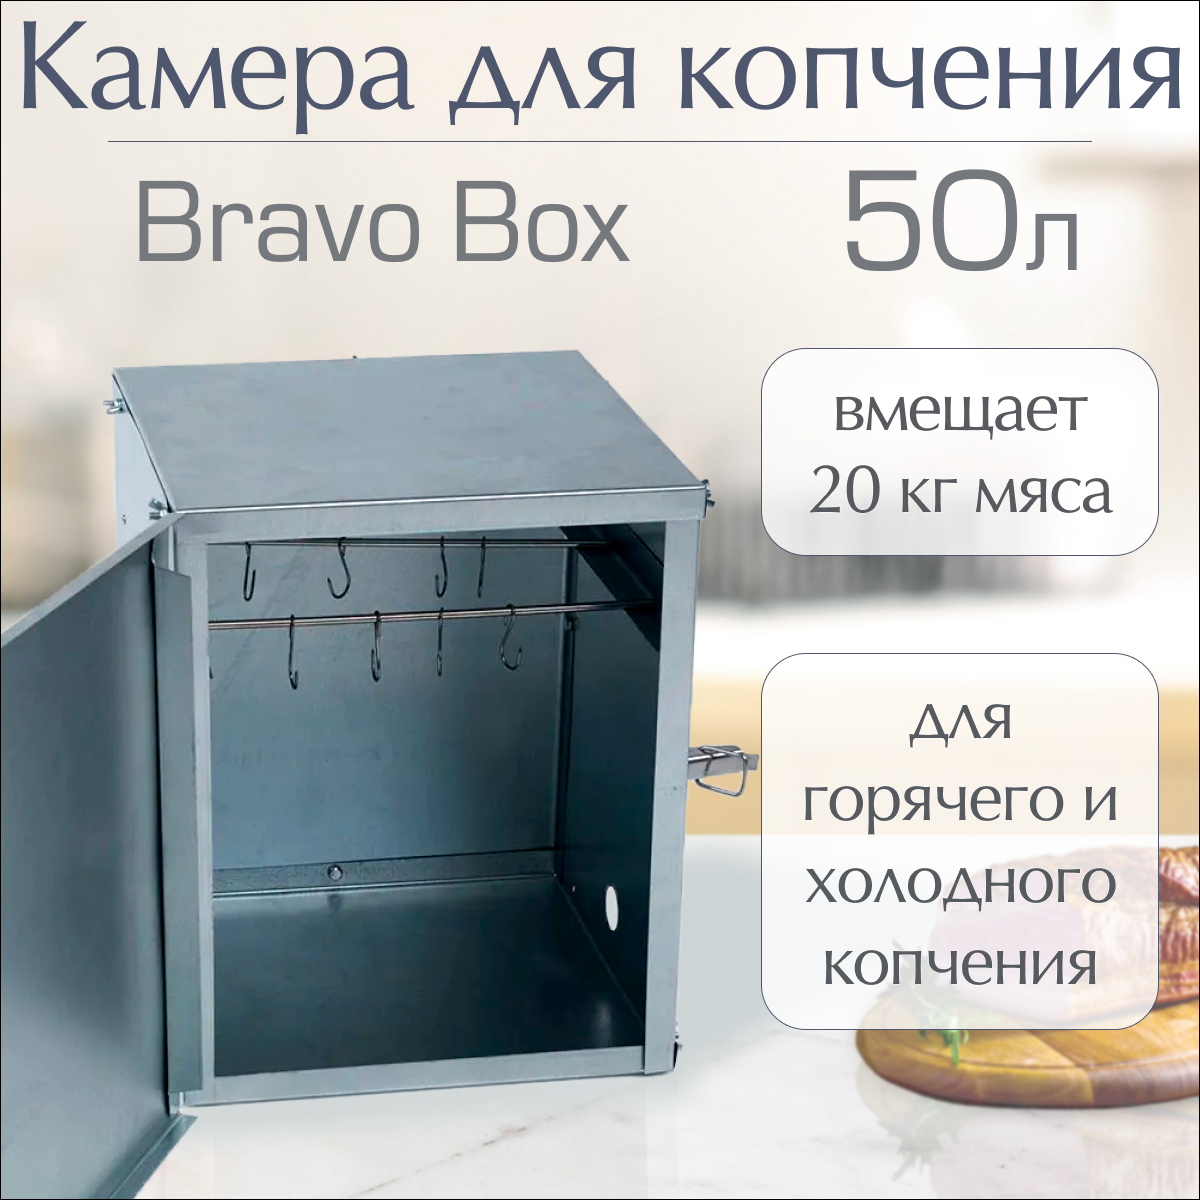 Камера для копчения Геликон «Bravo box»